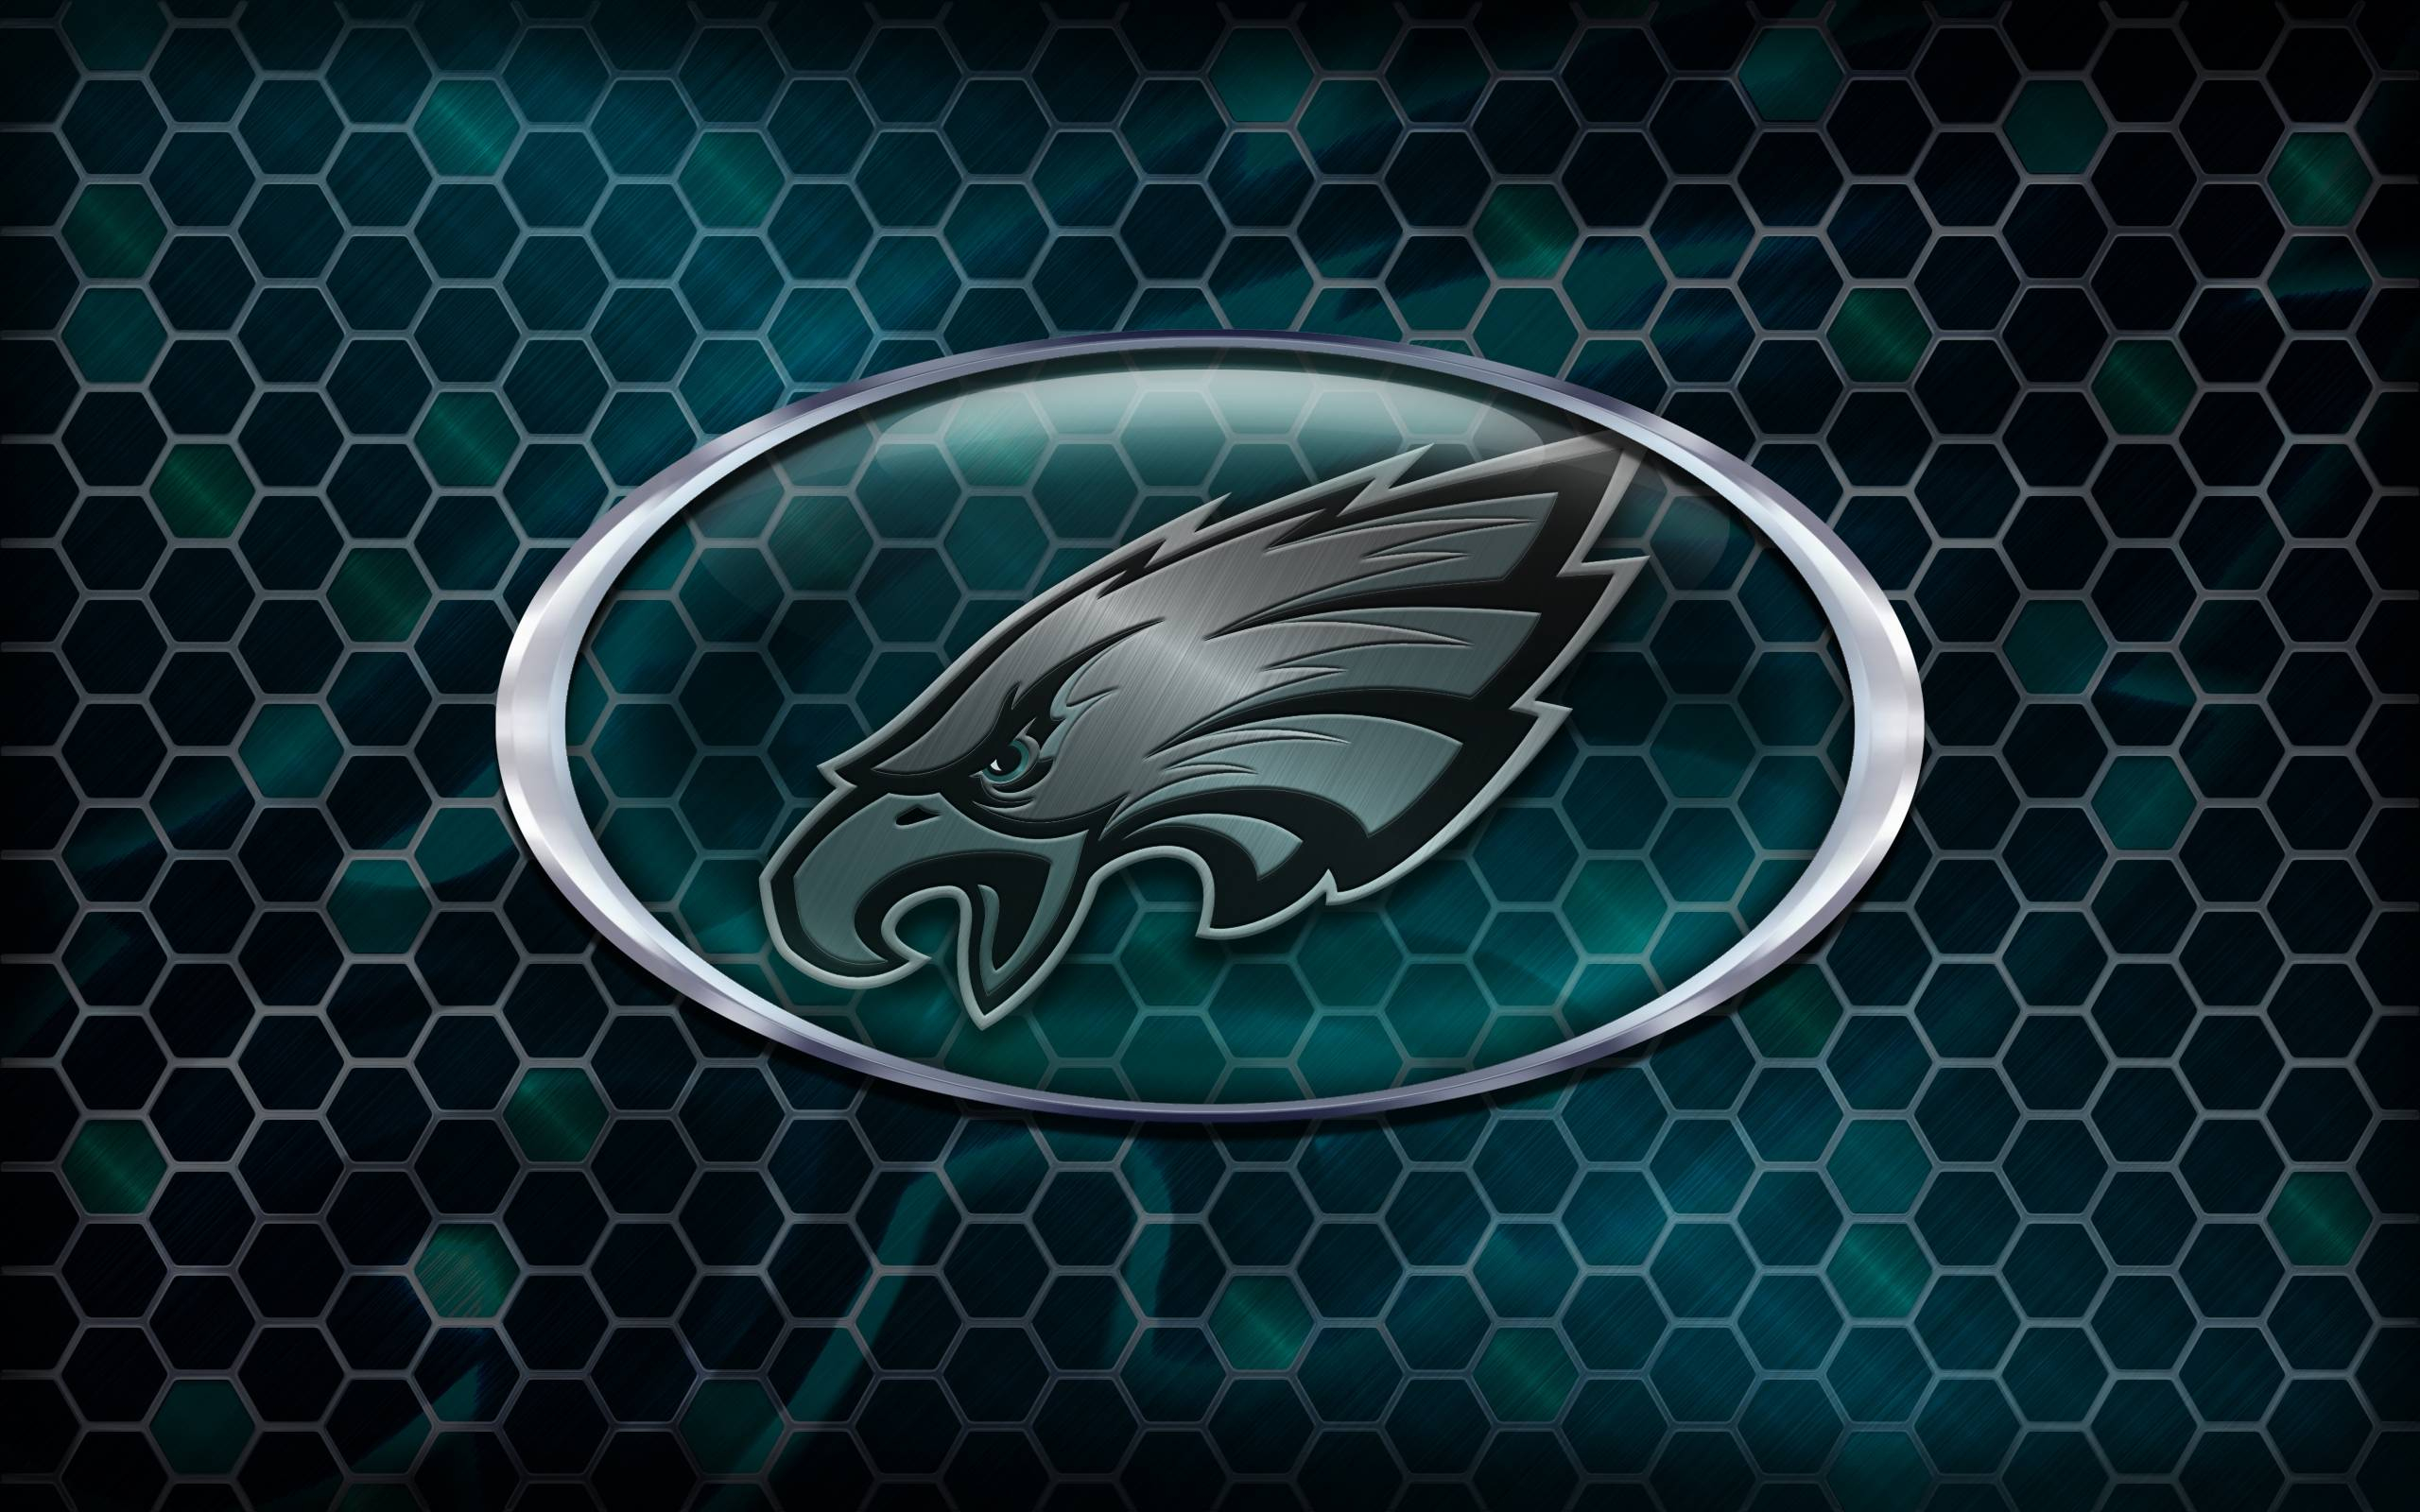 Philadelphia Eagles Football Team Wallpaper and Background 4K, HD, Dual Screen